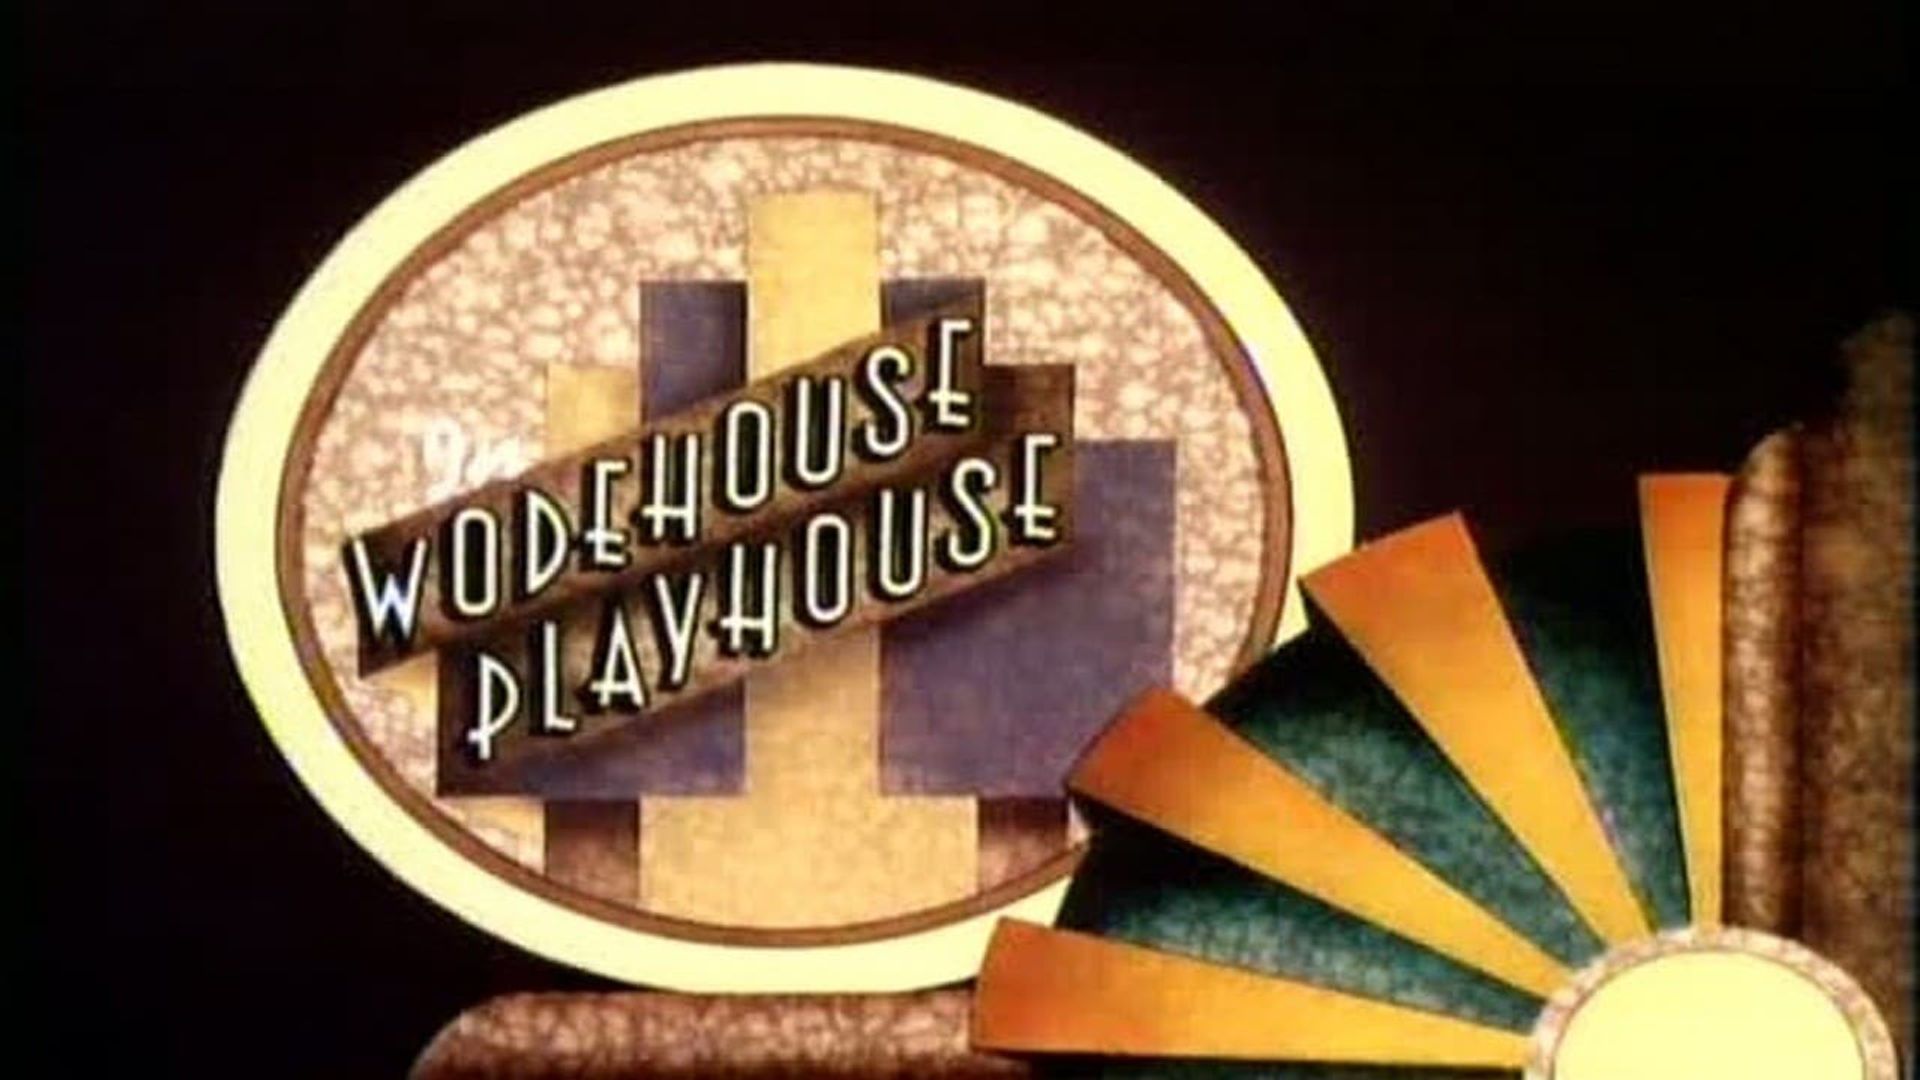 Wodehouse Playhouse background